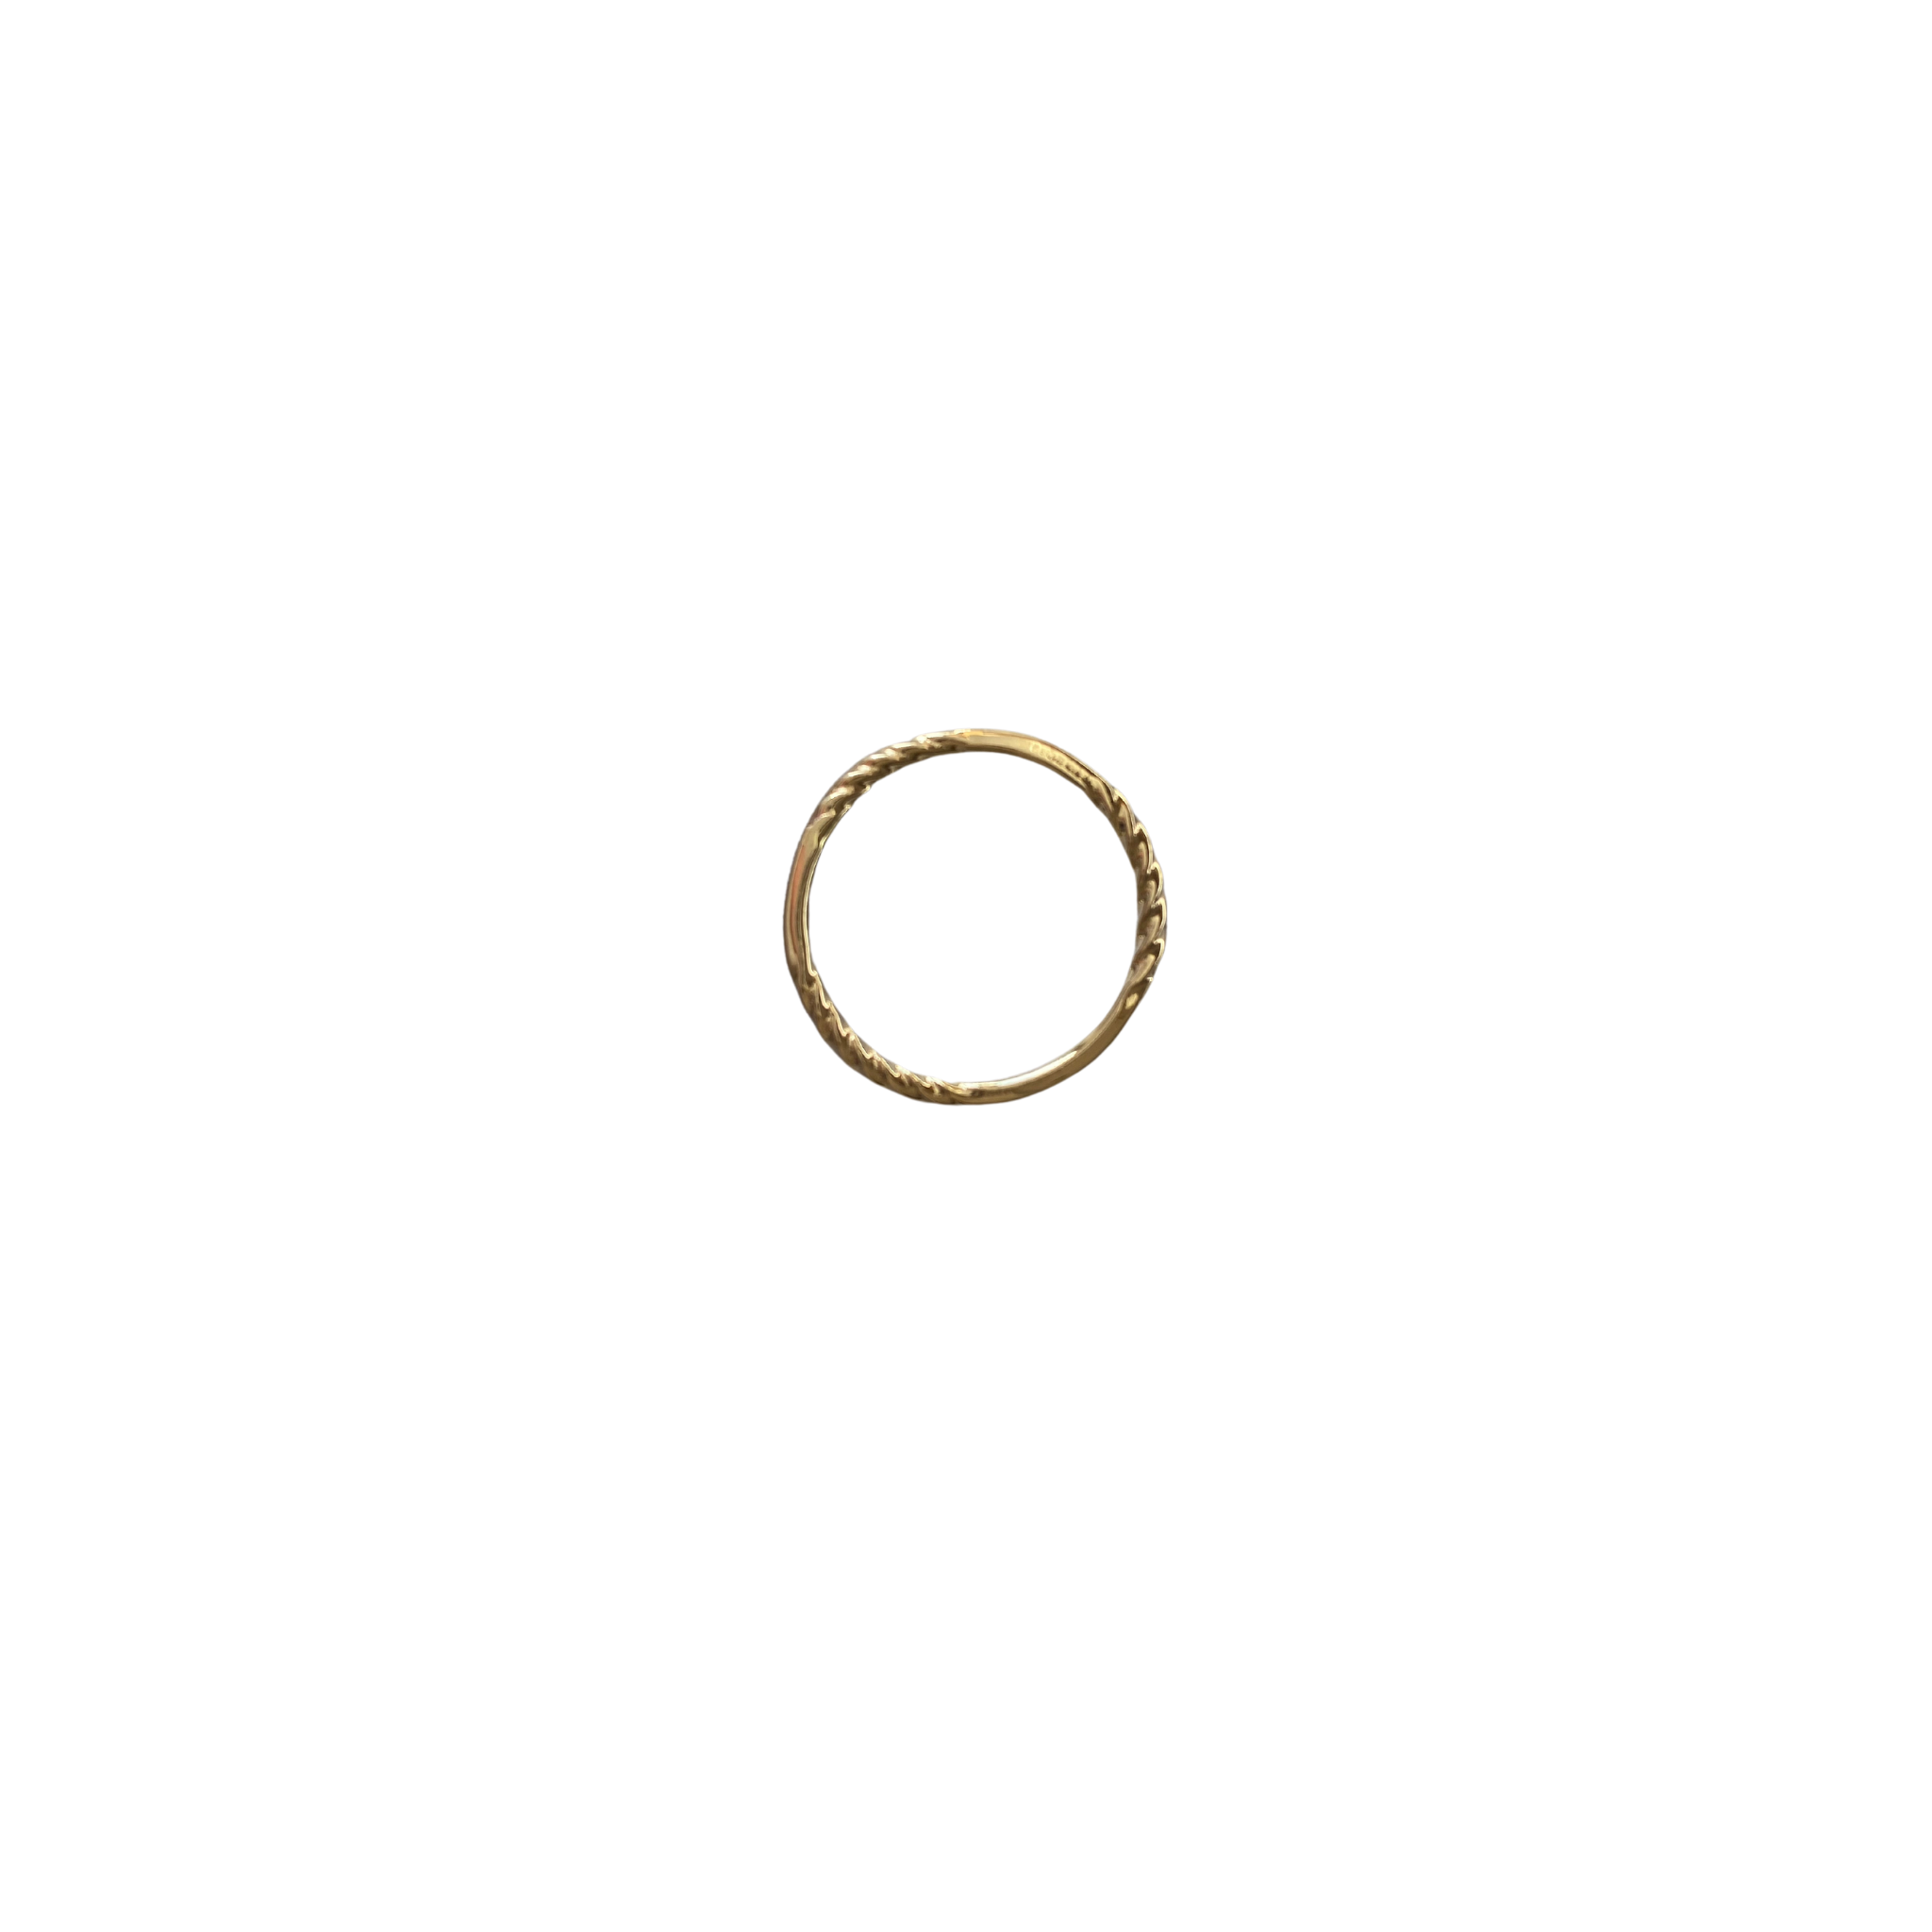 Segmented twist ring